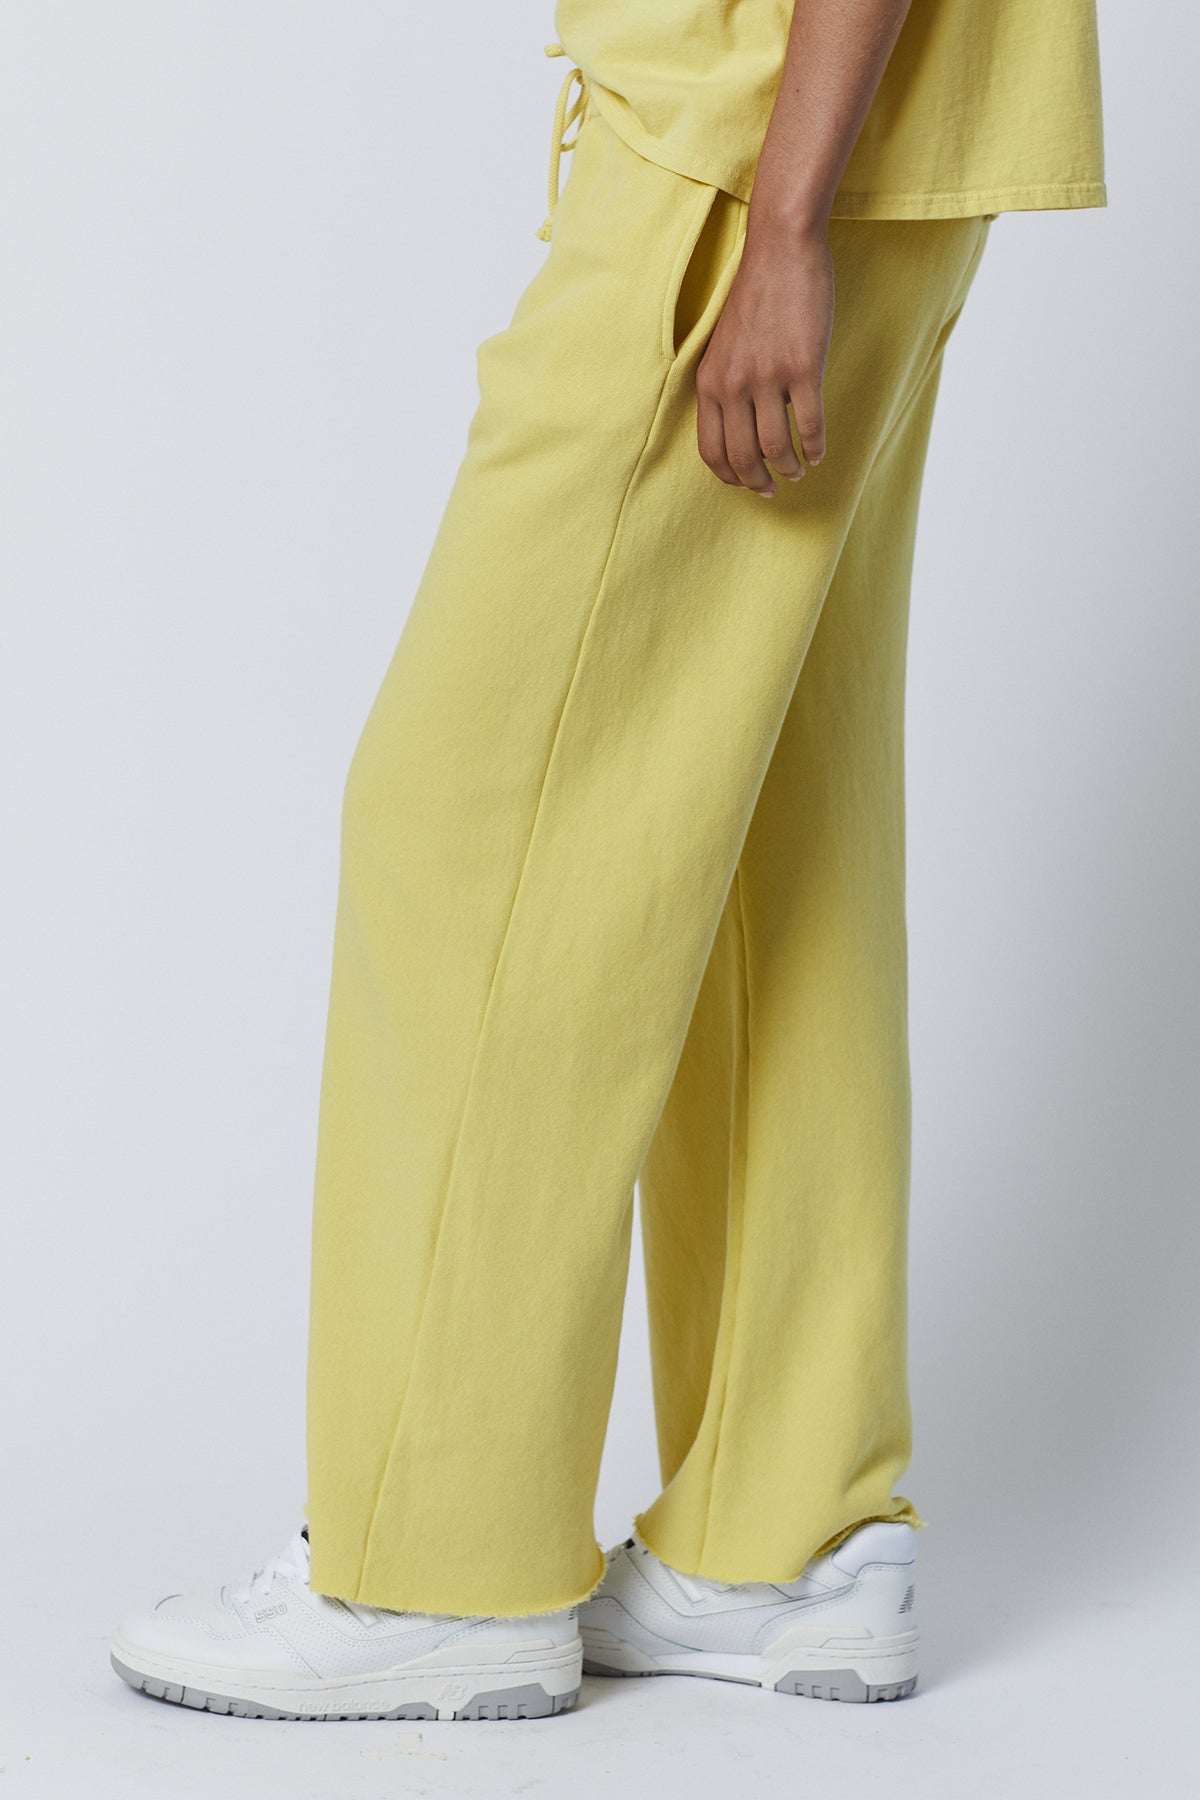   Montecito Sweatpant in lemon yellow side 